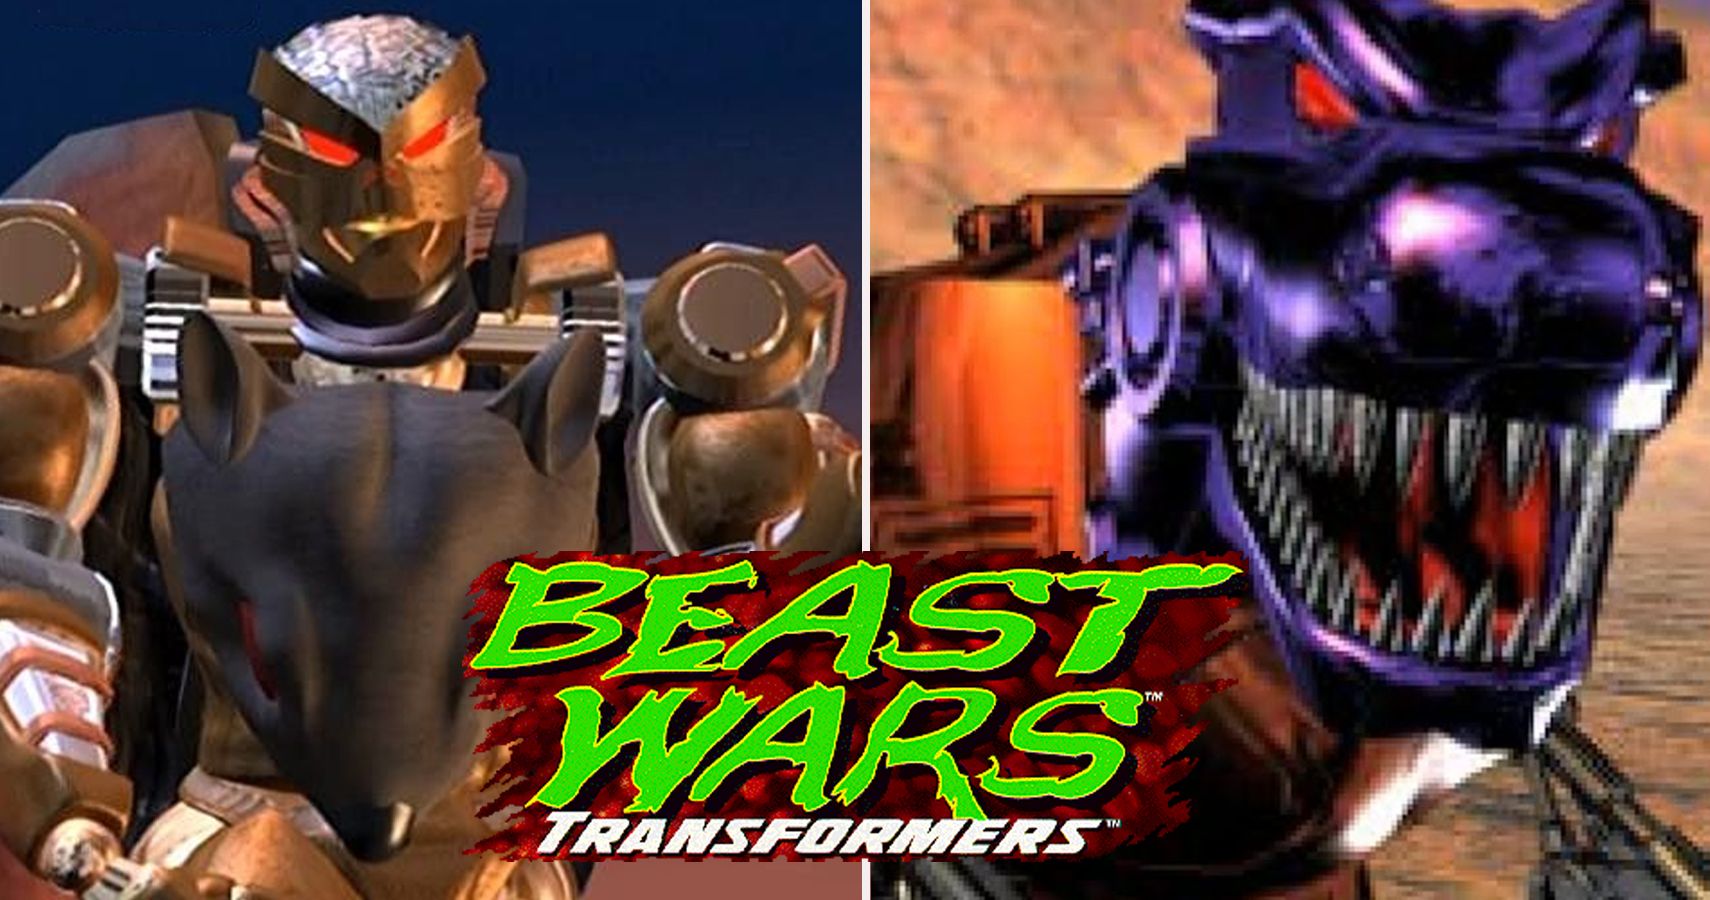 Wars transformers beast Beast Wars